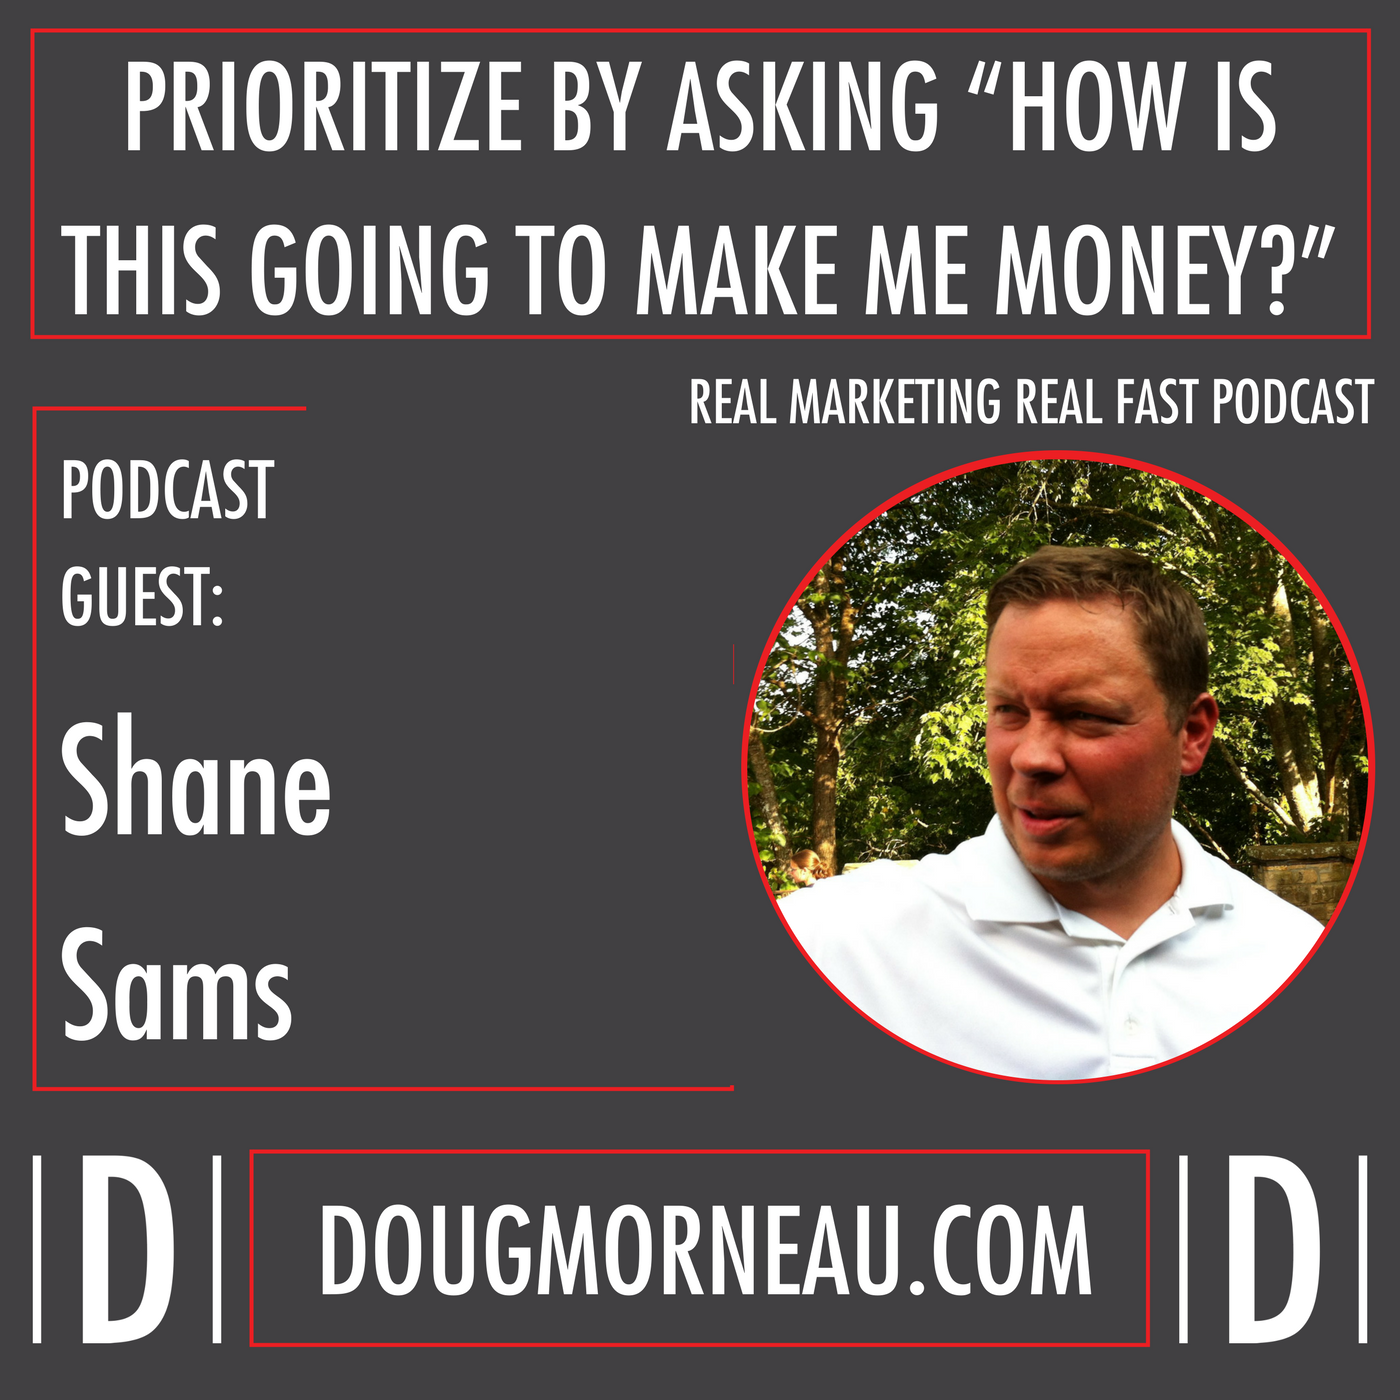 Doug Morneau - Shane Sams - REAL MARKETING REAL FAST PODCAST